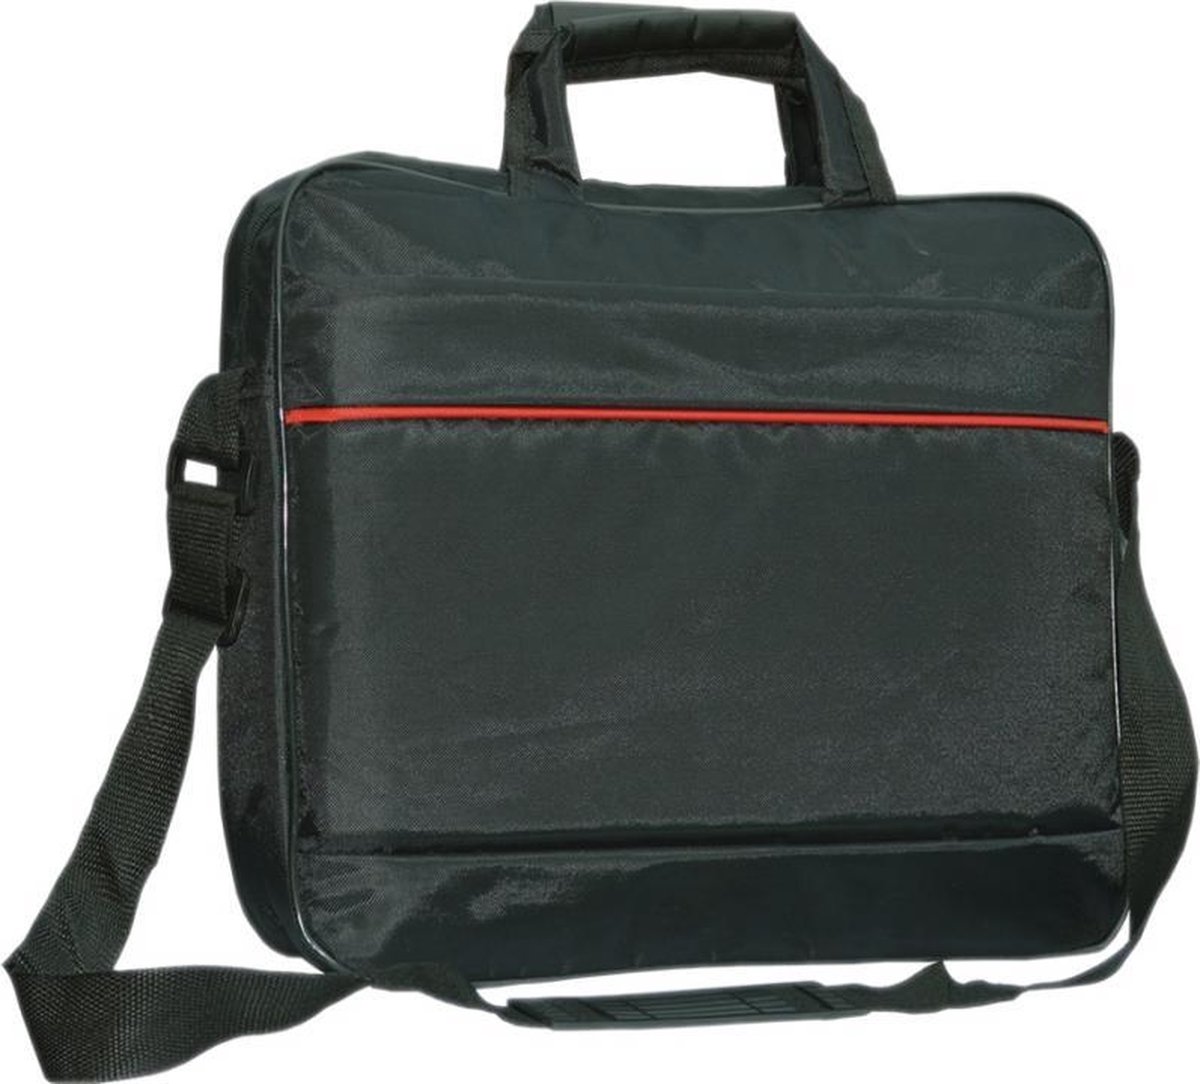 Asus Vivobook S300ca laptoptas messenger bag / schoudertas / tas , zwart , merk i12Cover